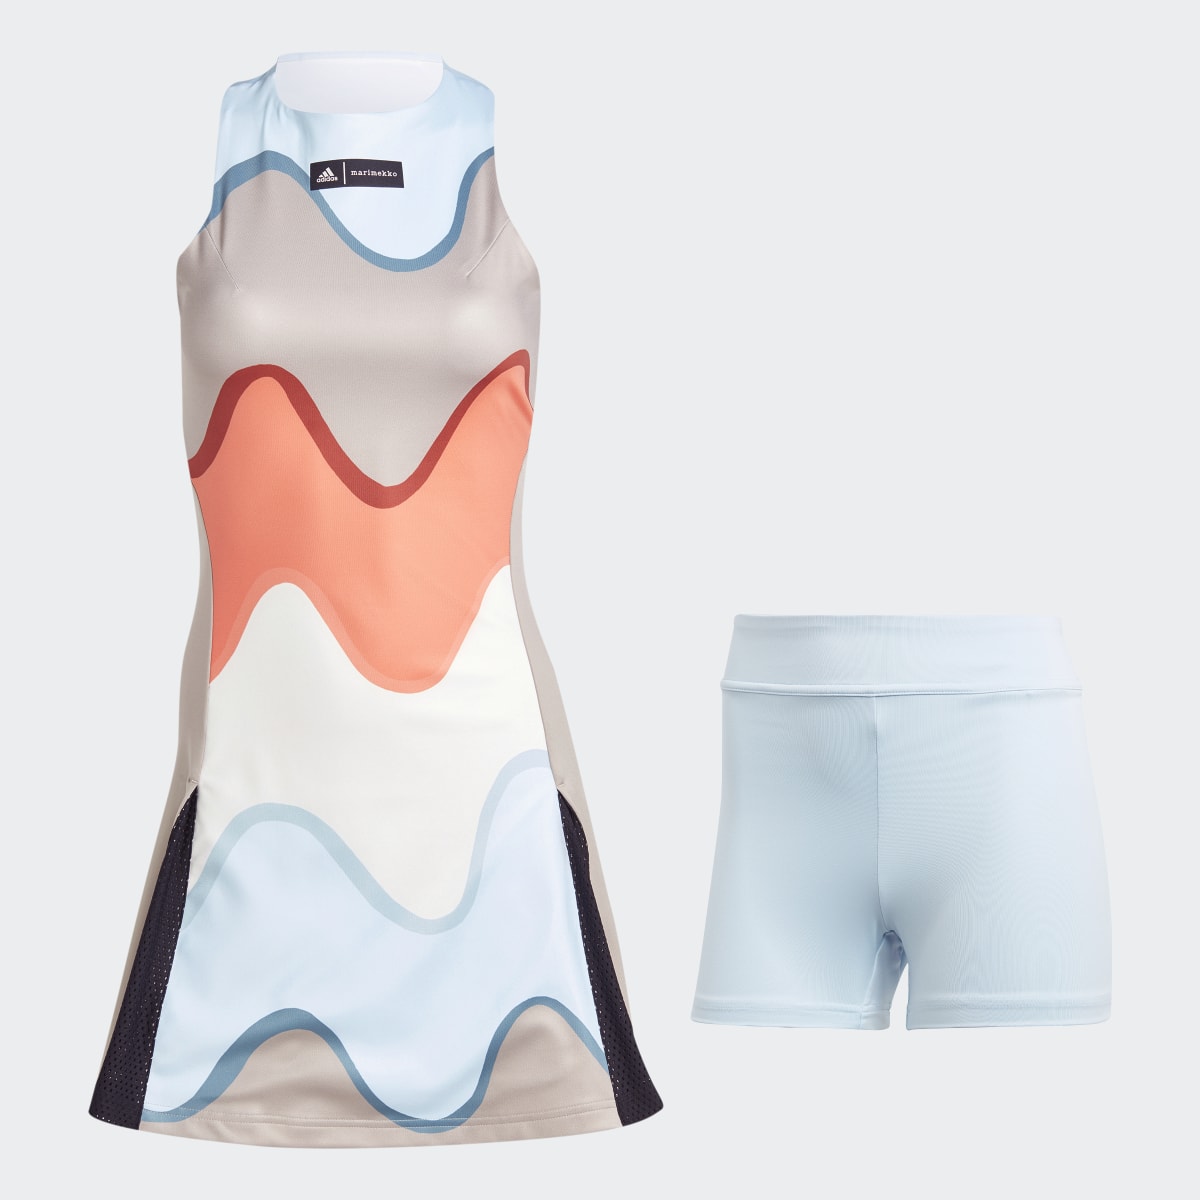 Adidas x Marimekko Tennis Dress. 5